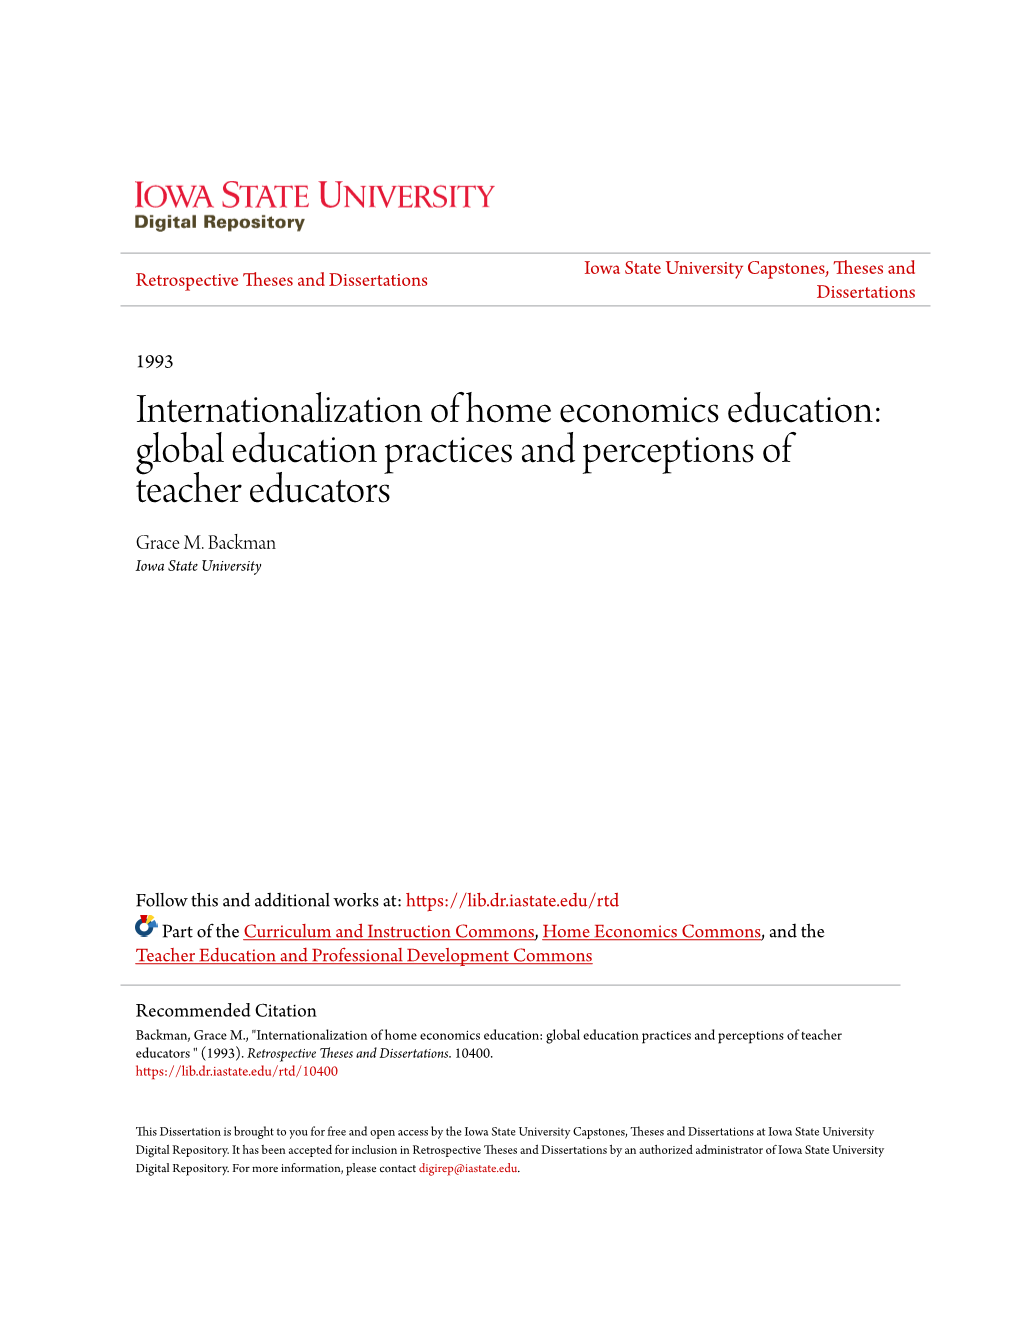 Internationalization of Home Economics Education: Global Education Practices and Perceptions of Teacher Educators Grace M